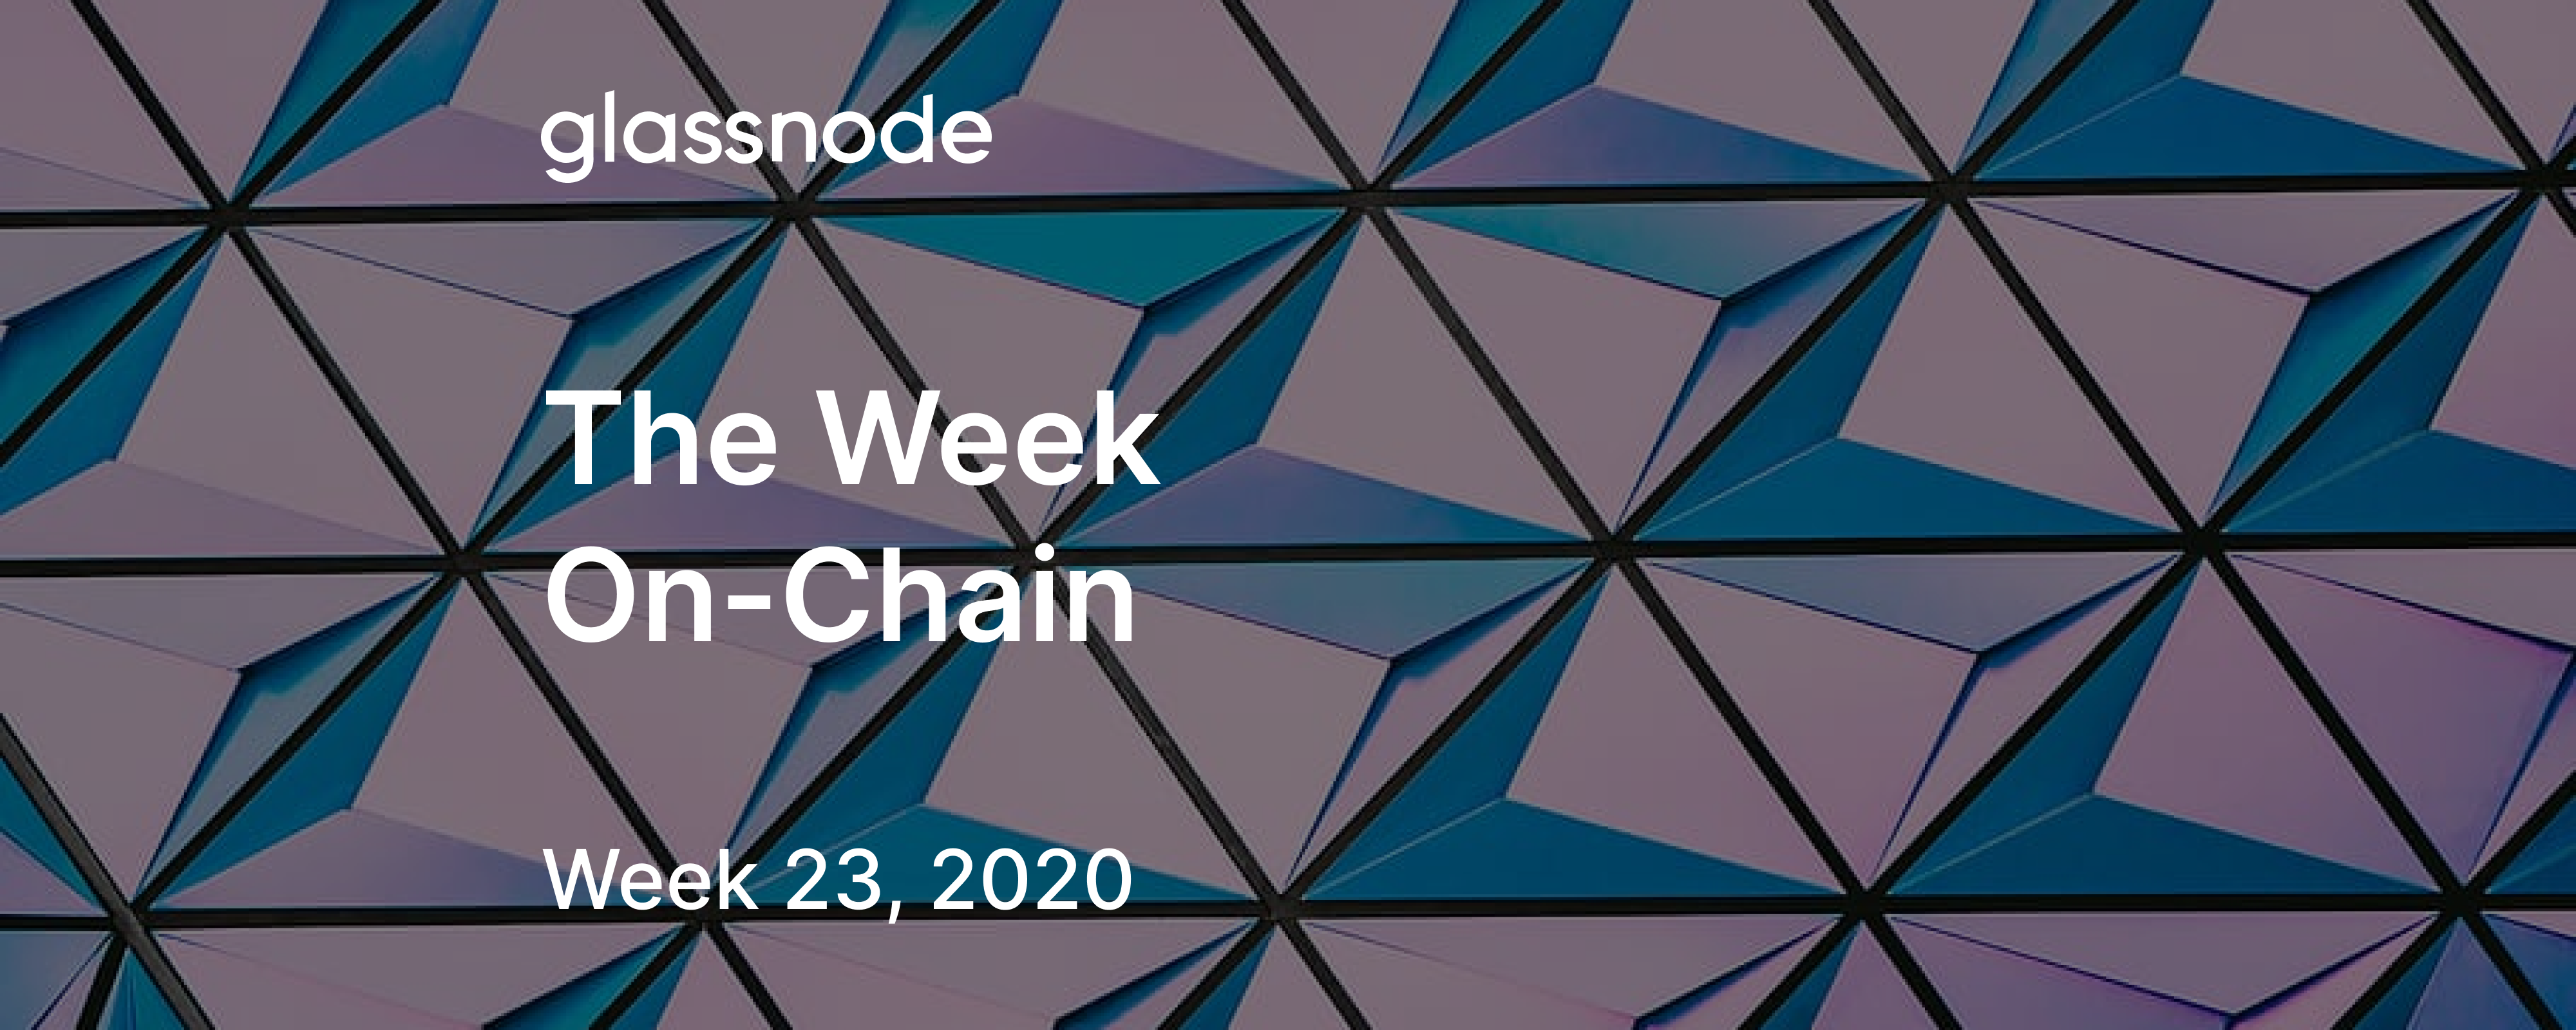 The Week On-Chain (Week 23, 2020)